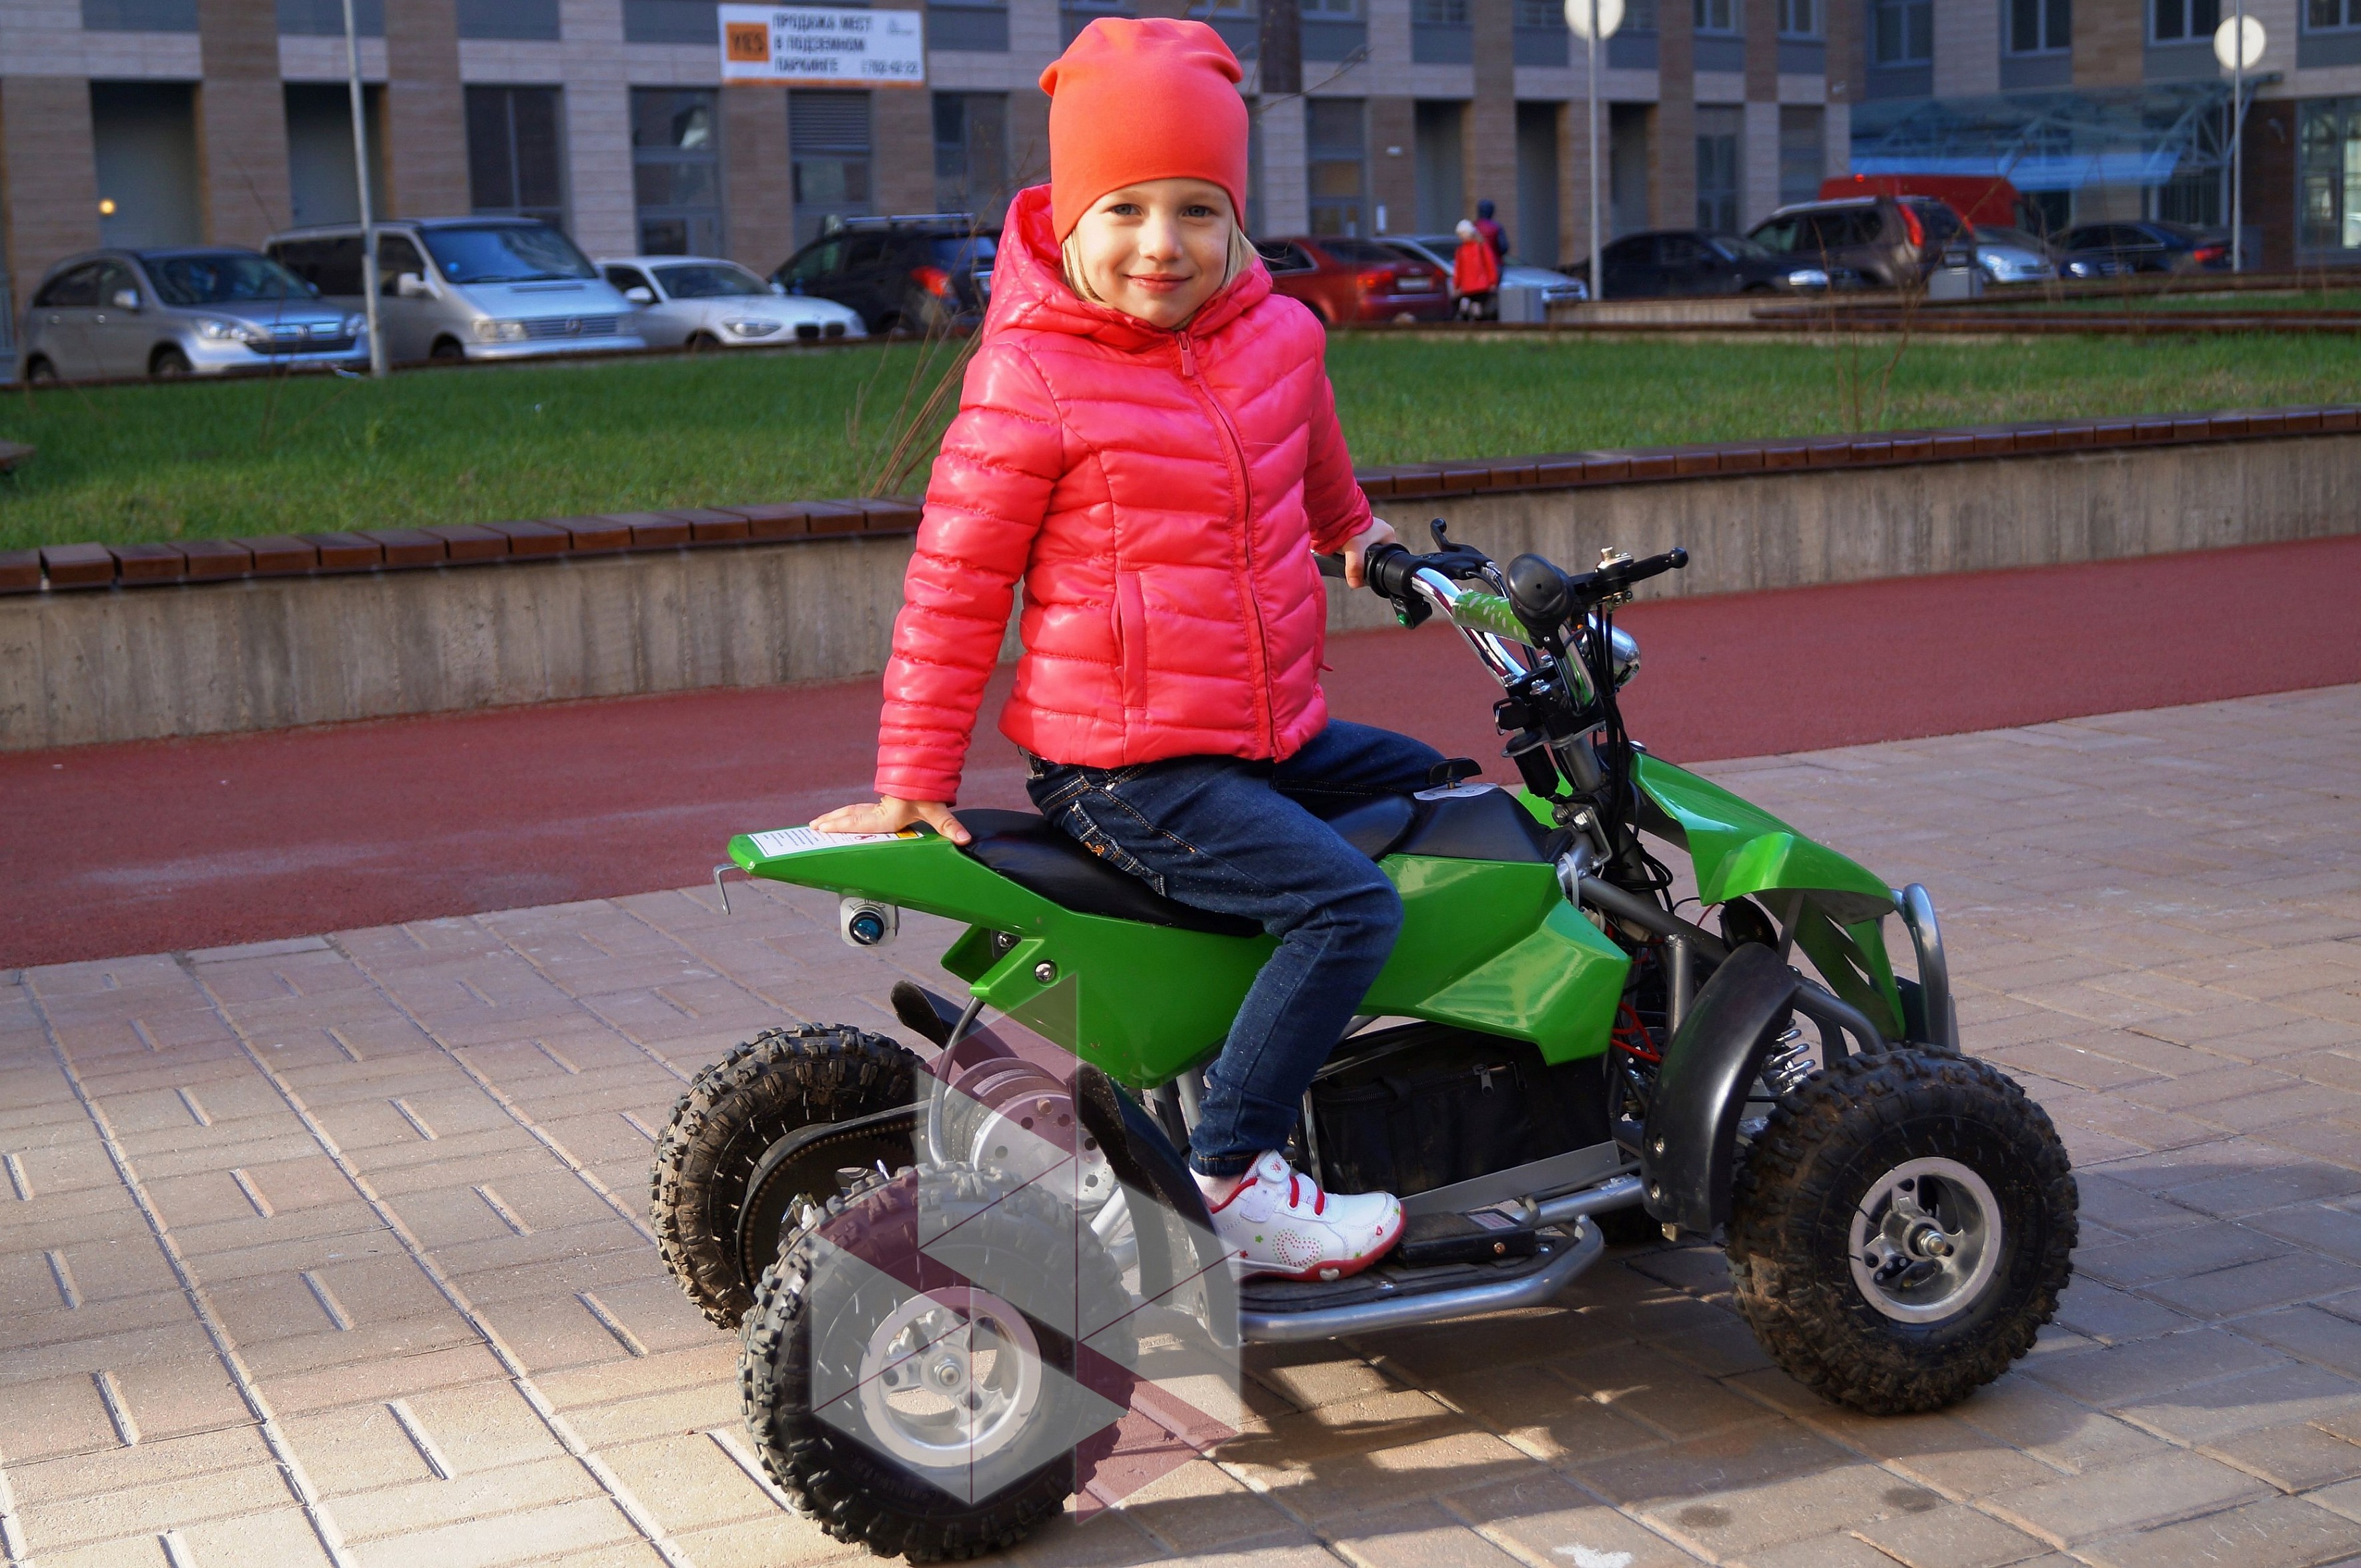 Авито квадроциклы детские б у. Детский квадроцикл е9047 small Motors. Квадроцикл для детей 3 лет. Детский квадроцикл электрический от 6 лет. Детский квадроцикл до 6 лет.